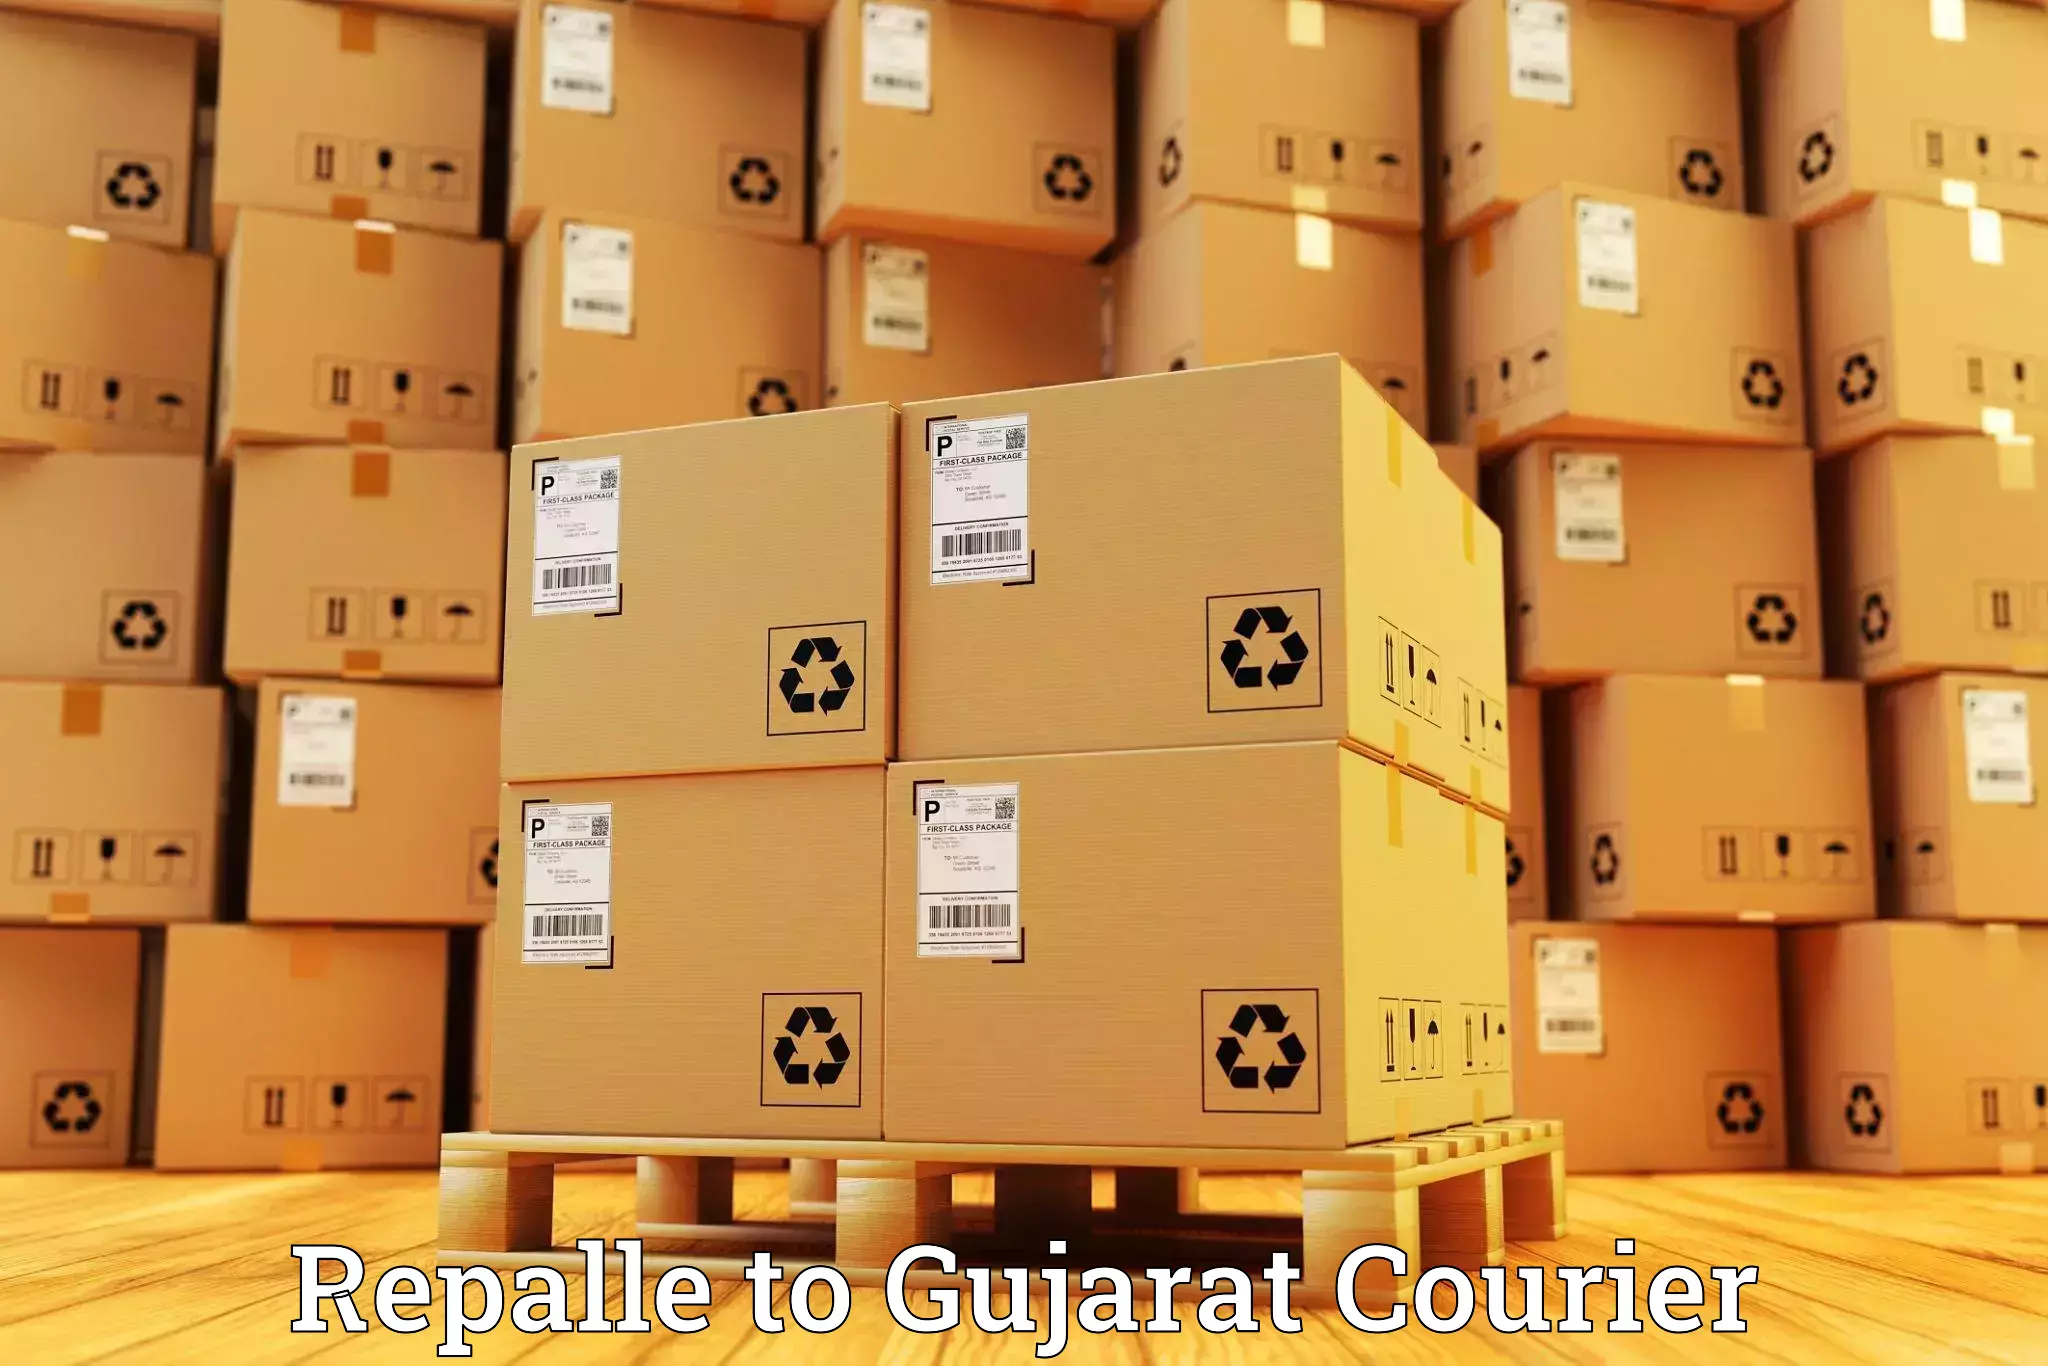 Baggage relocation service Repalle to Gujarat